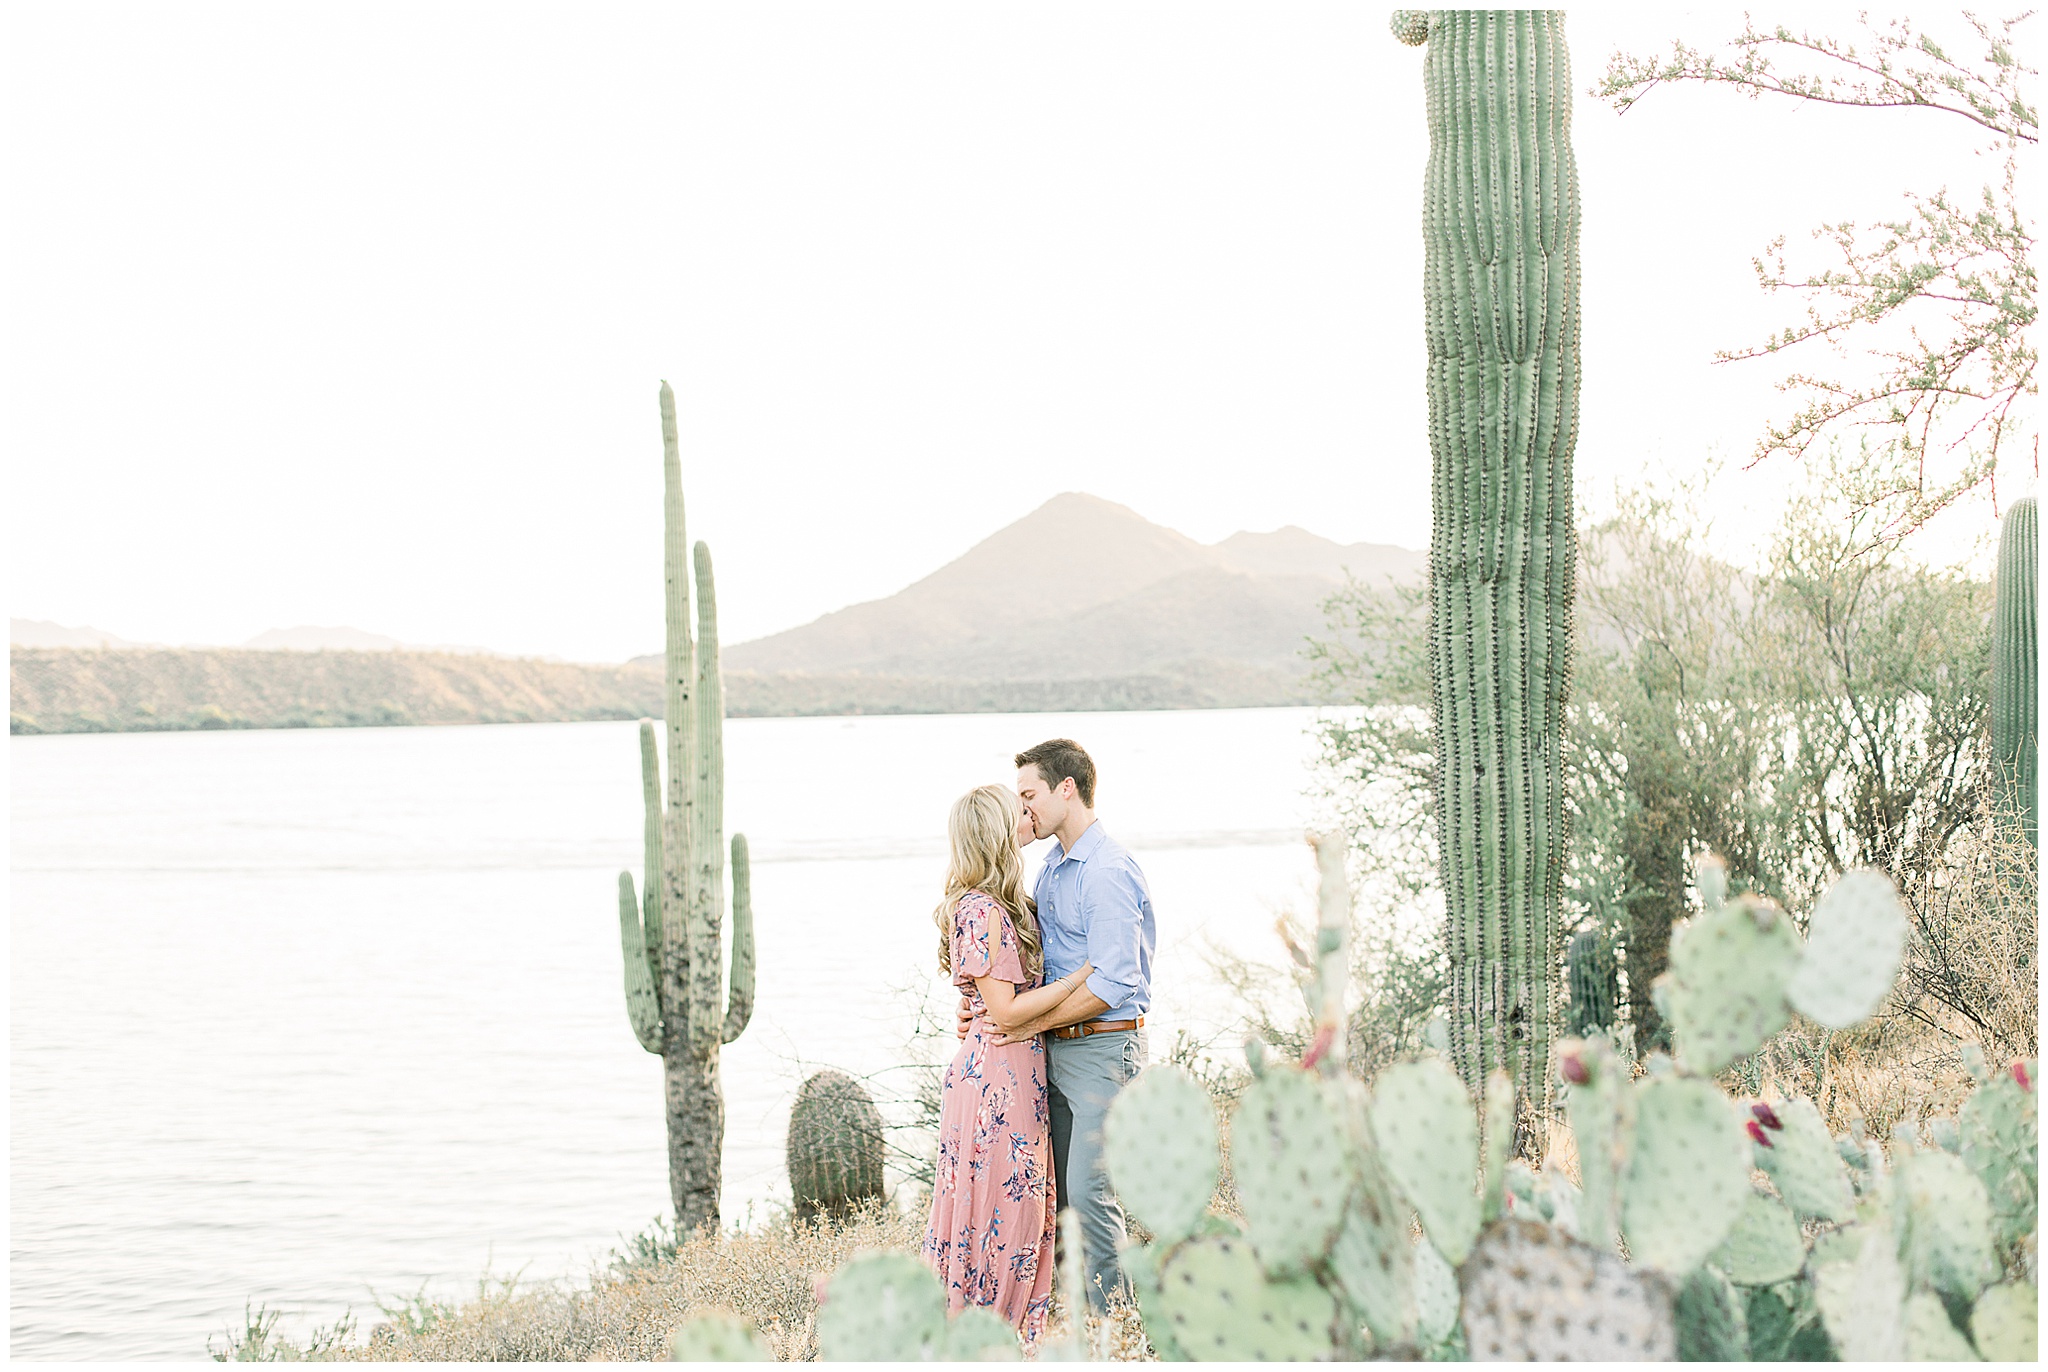 Aly-Kirk-Photo-Arizona-Photographer-Butcher-Jones-Couples-Engagement-Desert-Lake-Mountains